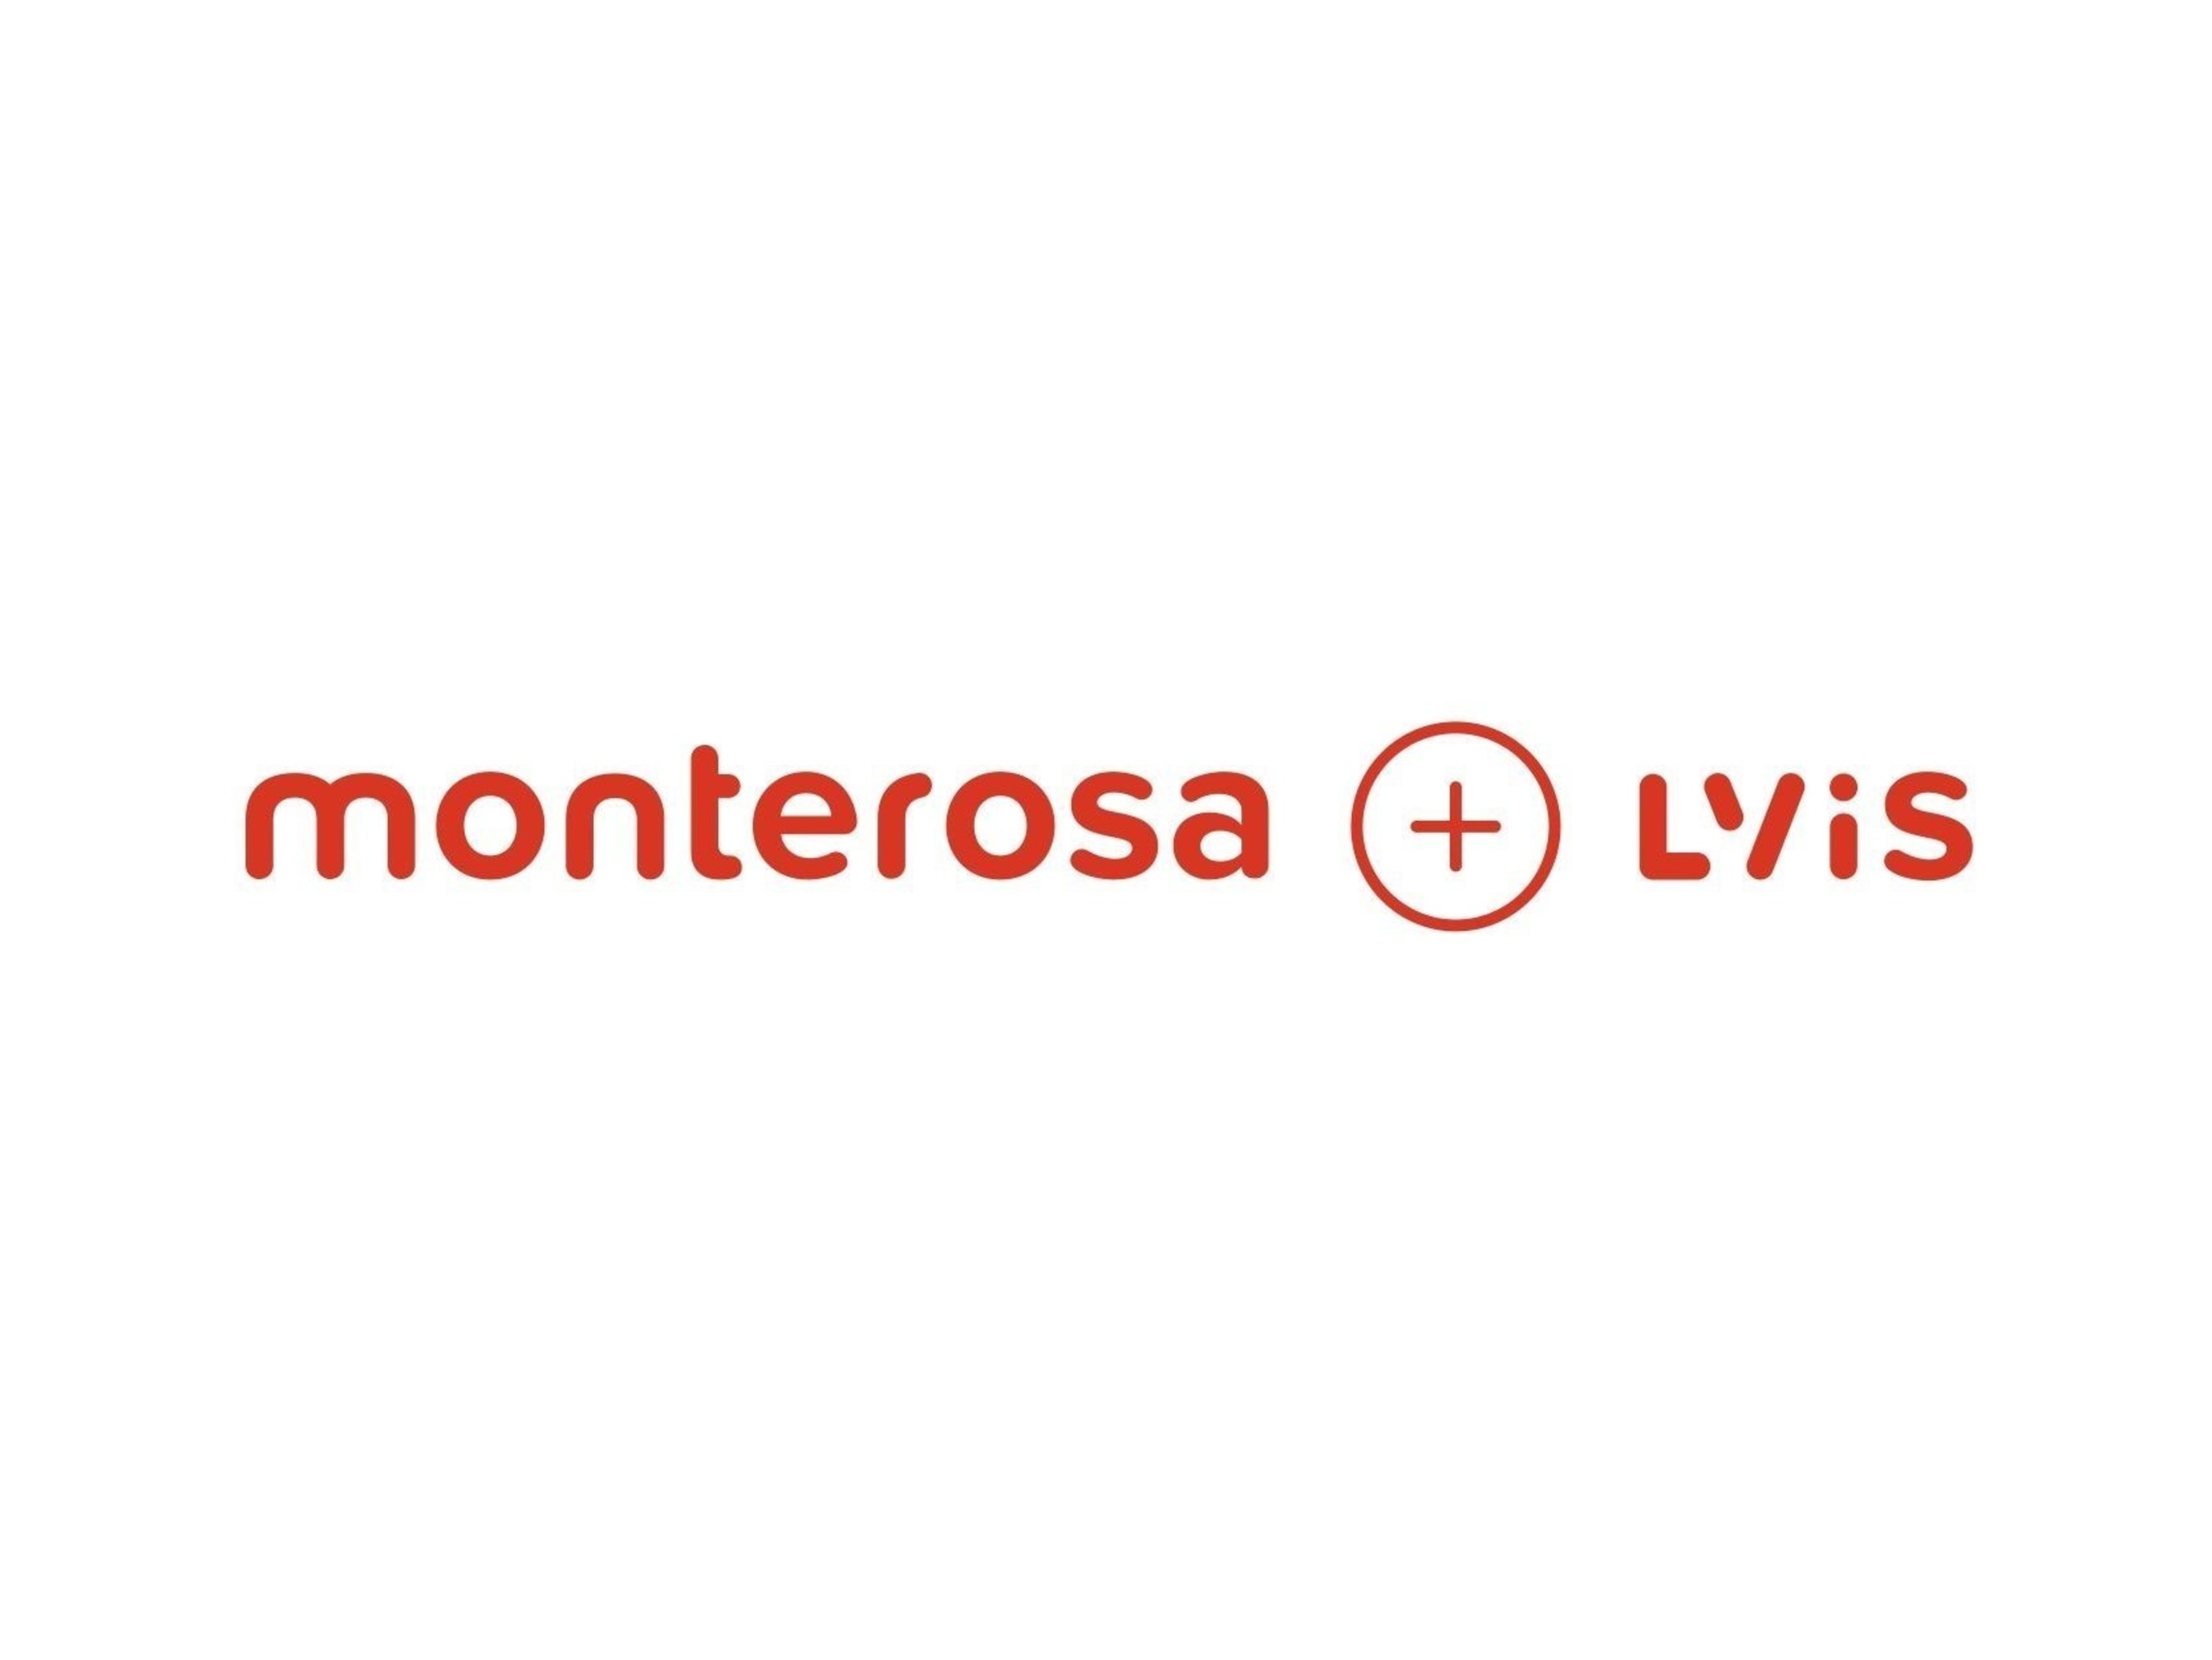 Monterosa logo (PRNewsFoto/Monterosa) (PRNewsFoto/Monterosa)